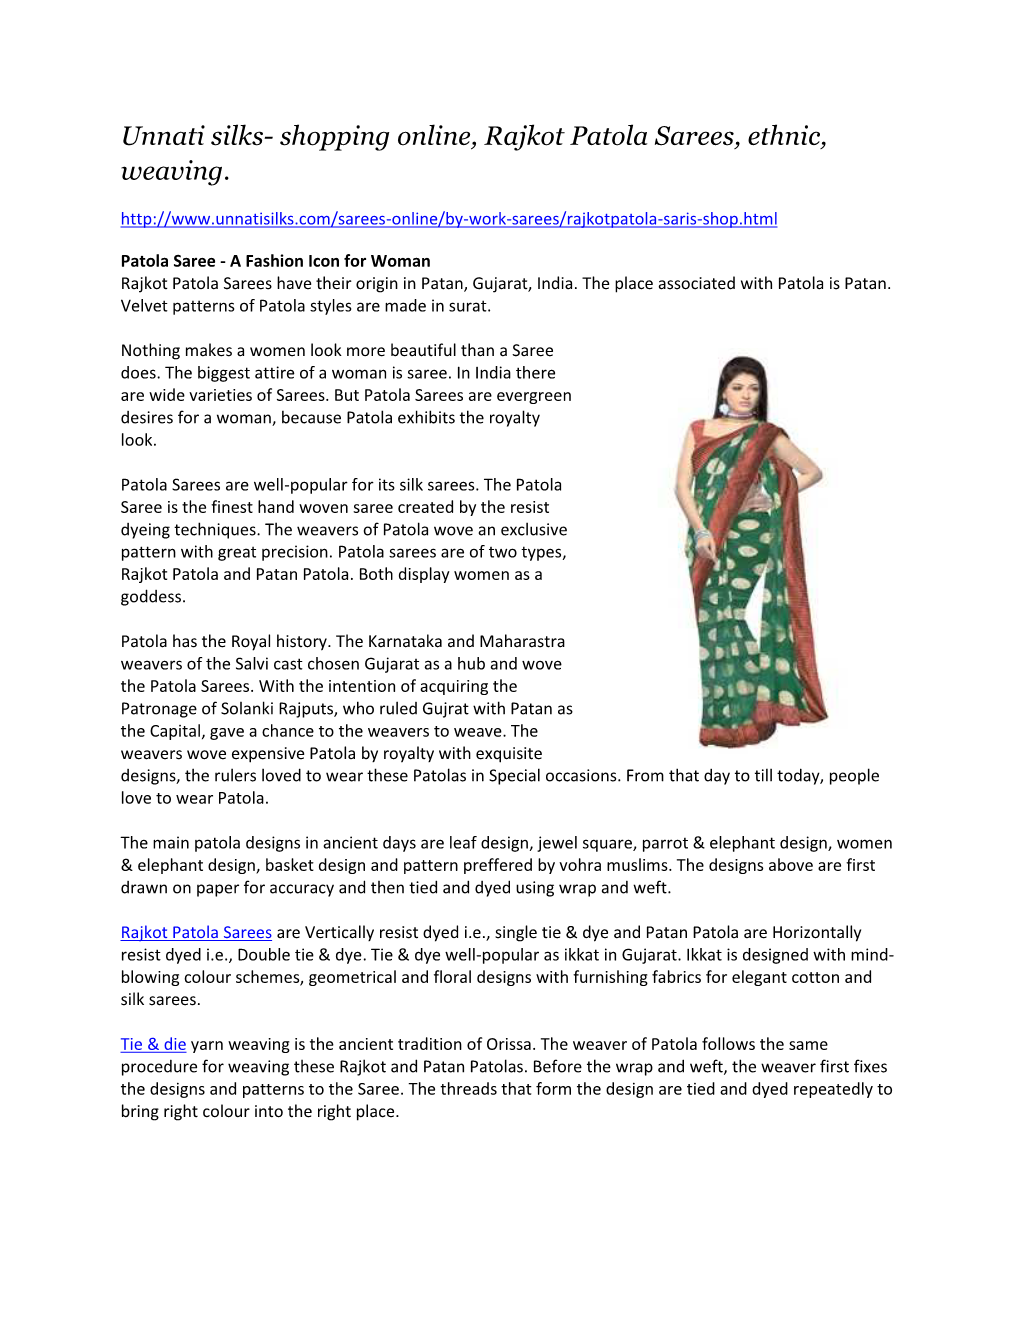 Unnati Silks- Shopping Online, Rajkot Patola Sarees, Ethnic, Weaving